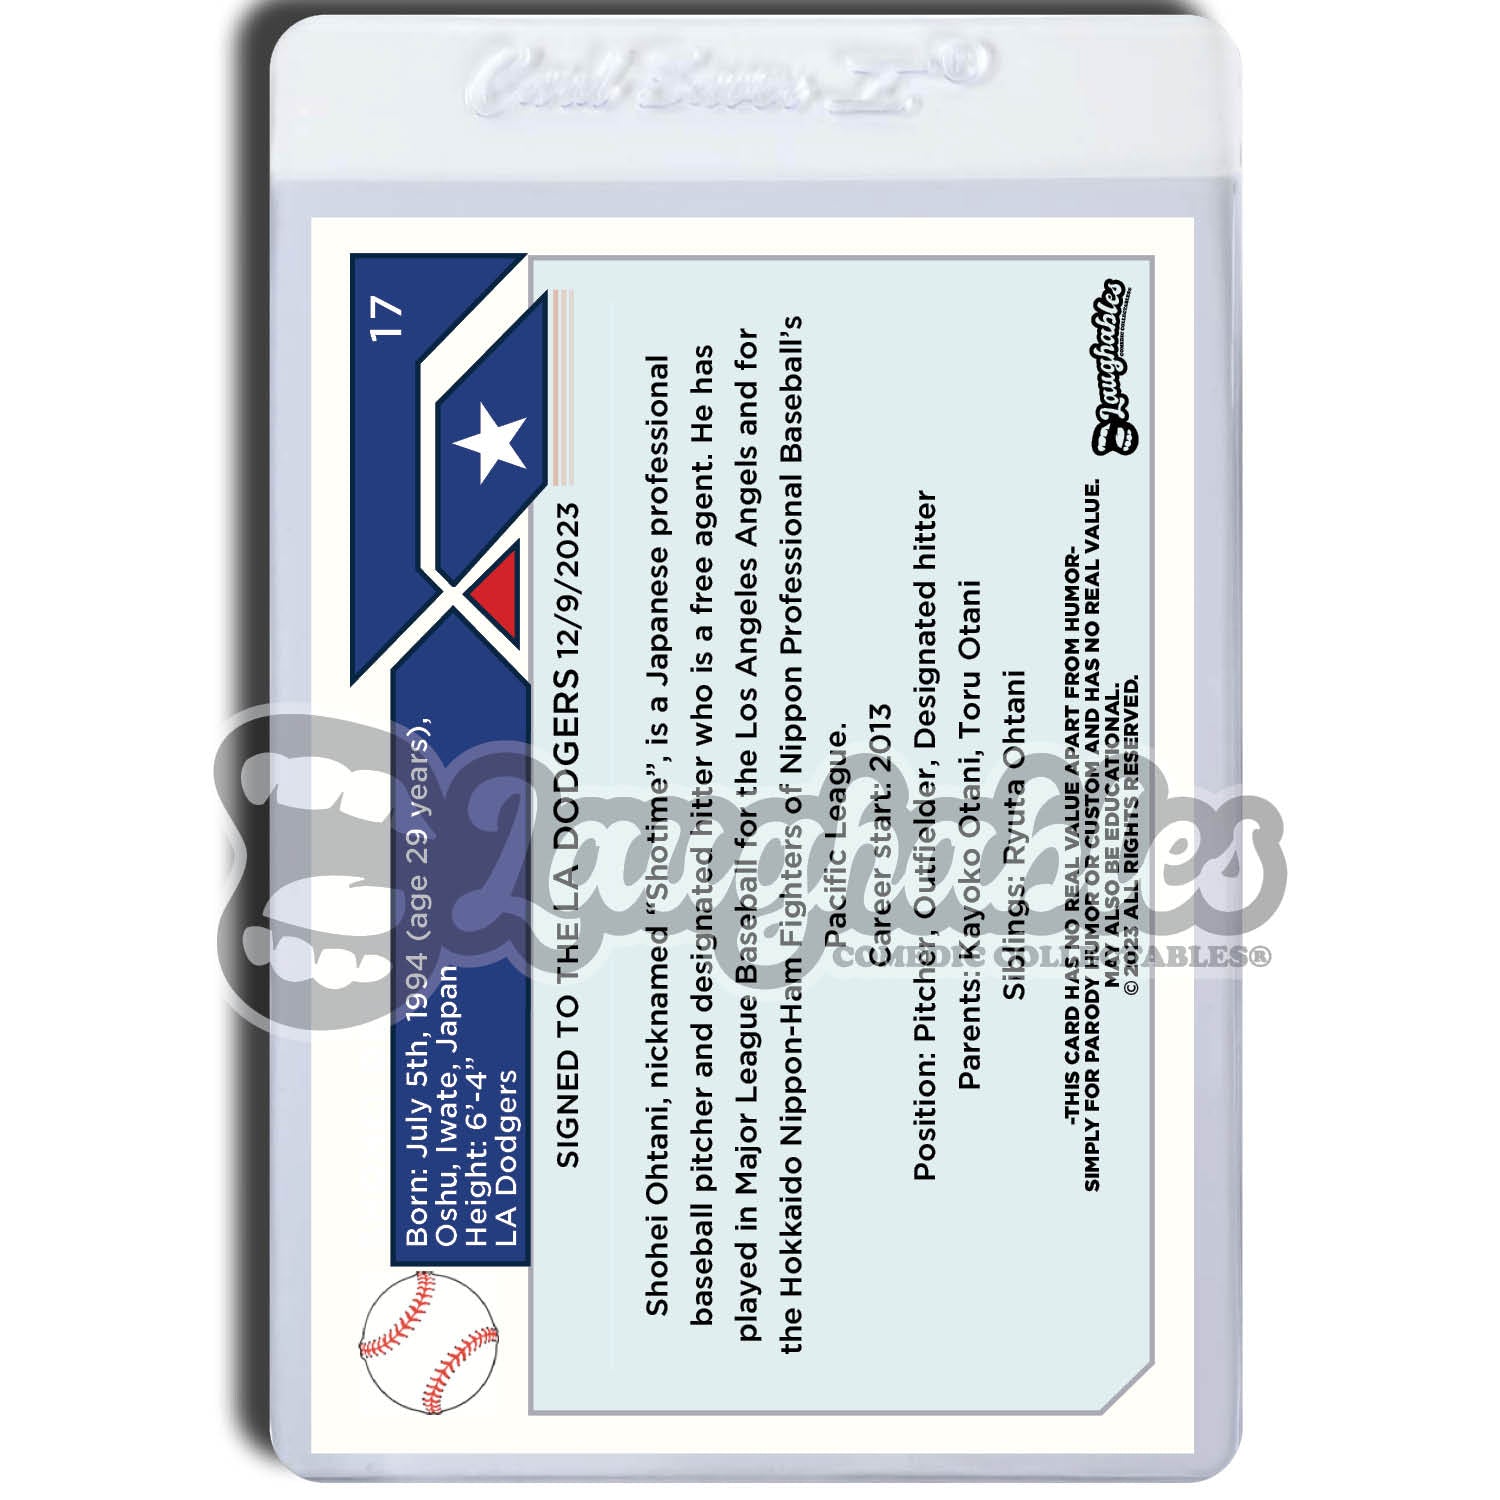 Shohei Ohtani | Dodgers | ACEO | Limited Custom Art Baseball Trading Card Novelty